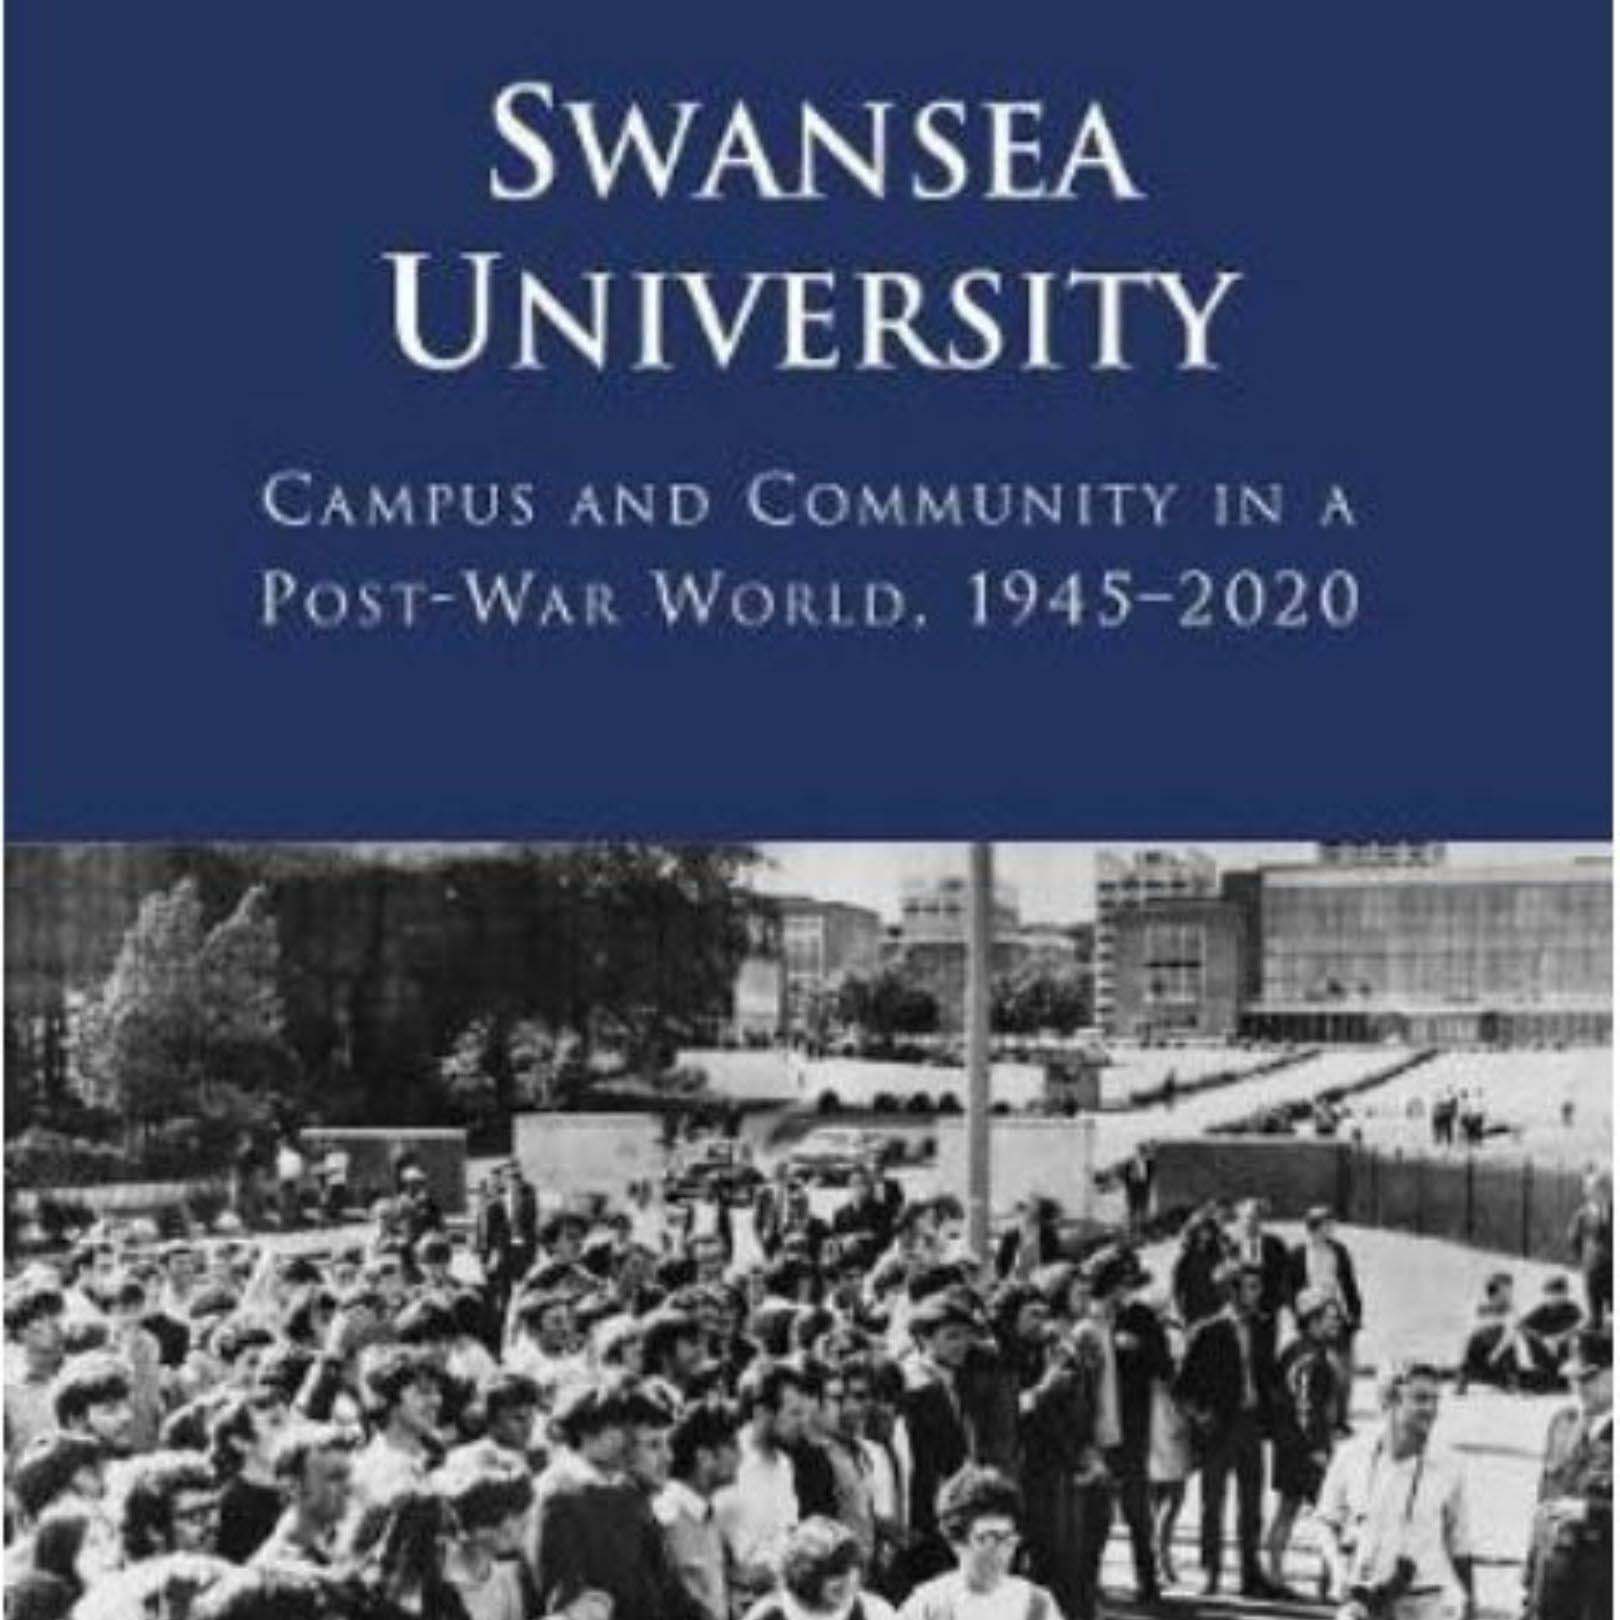 A History of Swansea University by Sam Blaxland